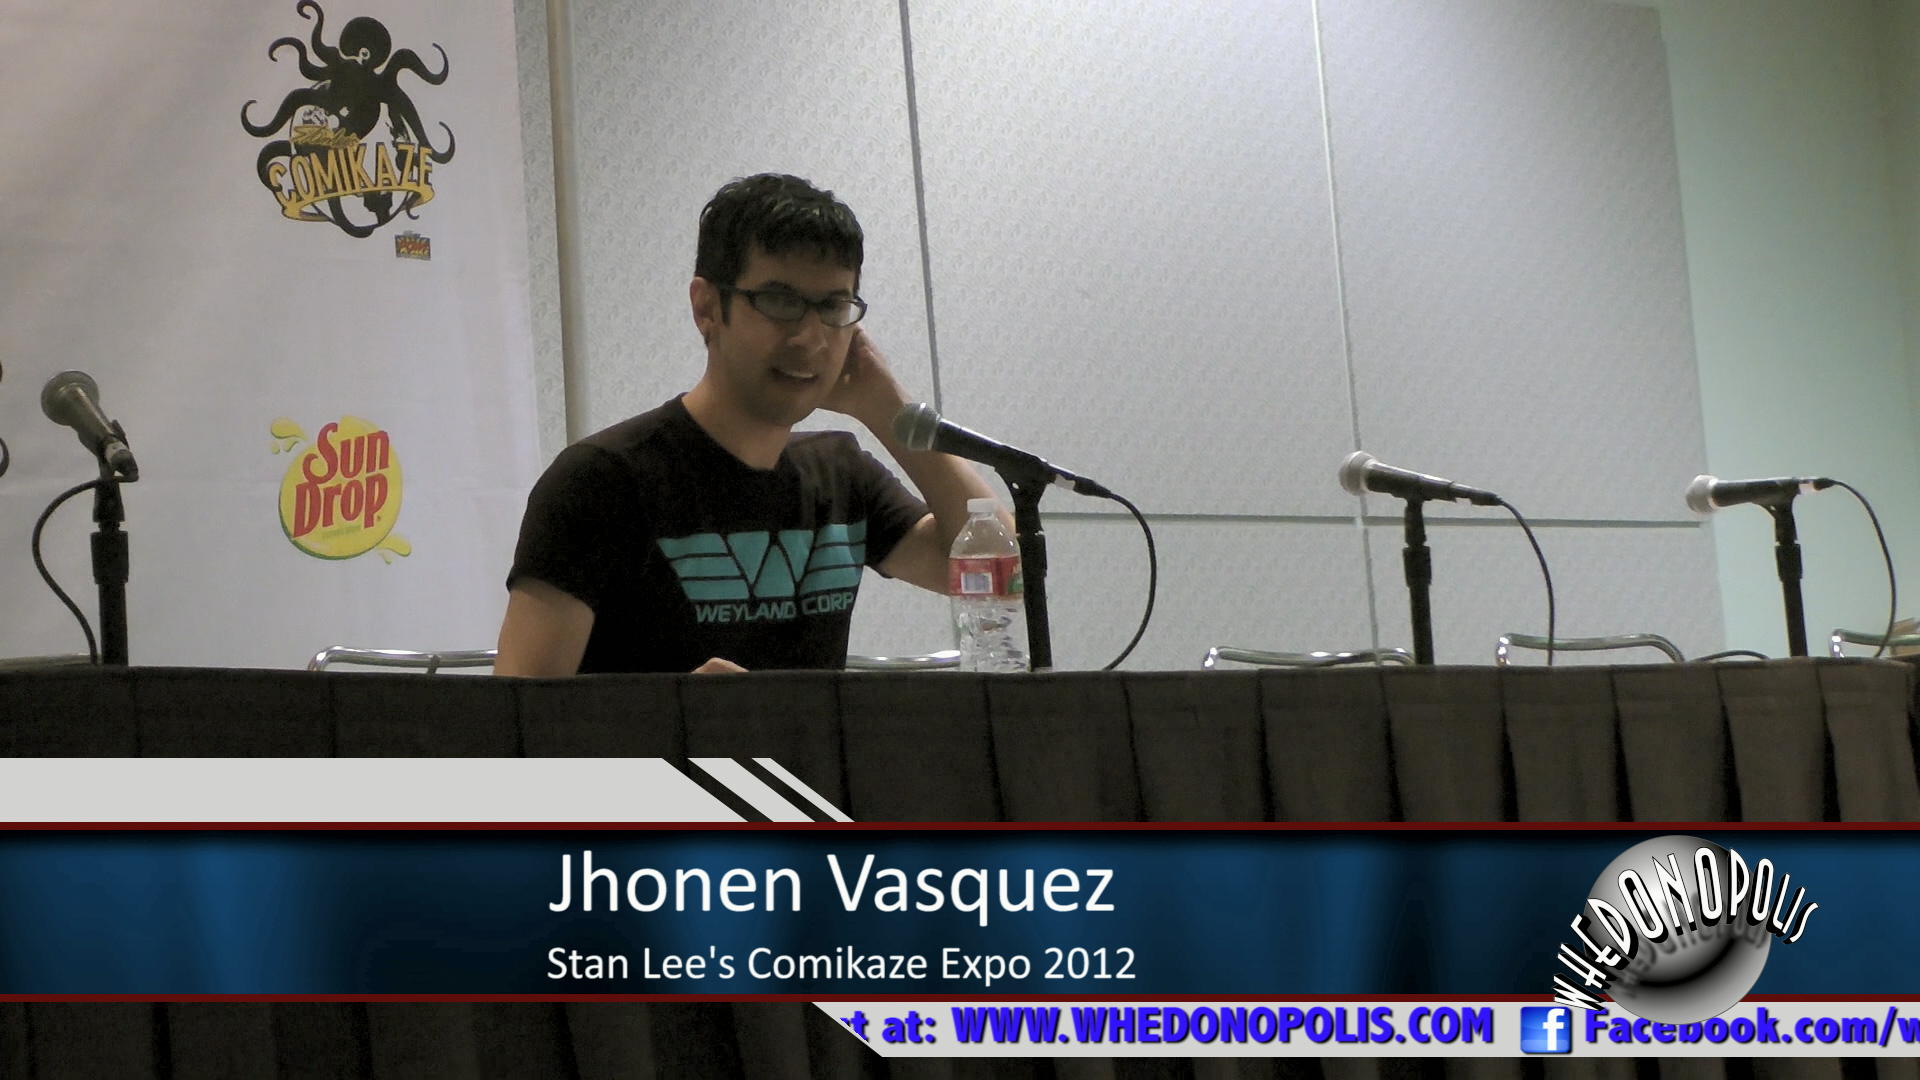 Invader Zim creator Jhonen Vasquez at Comikaze 2012